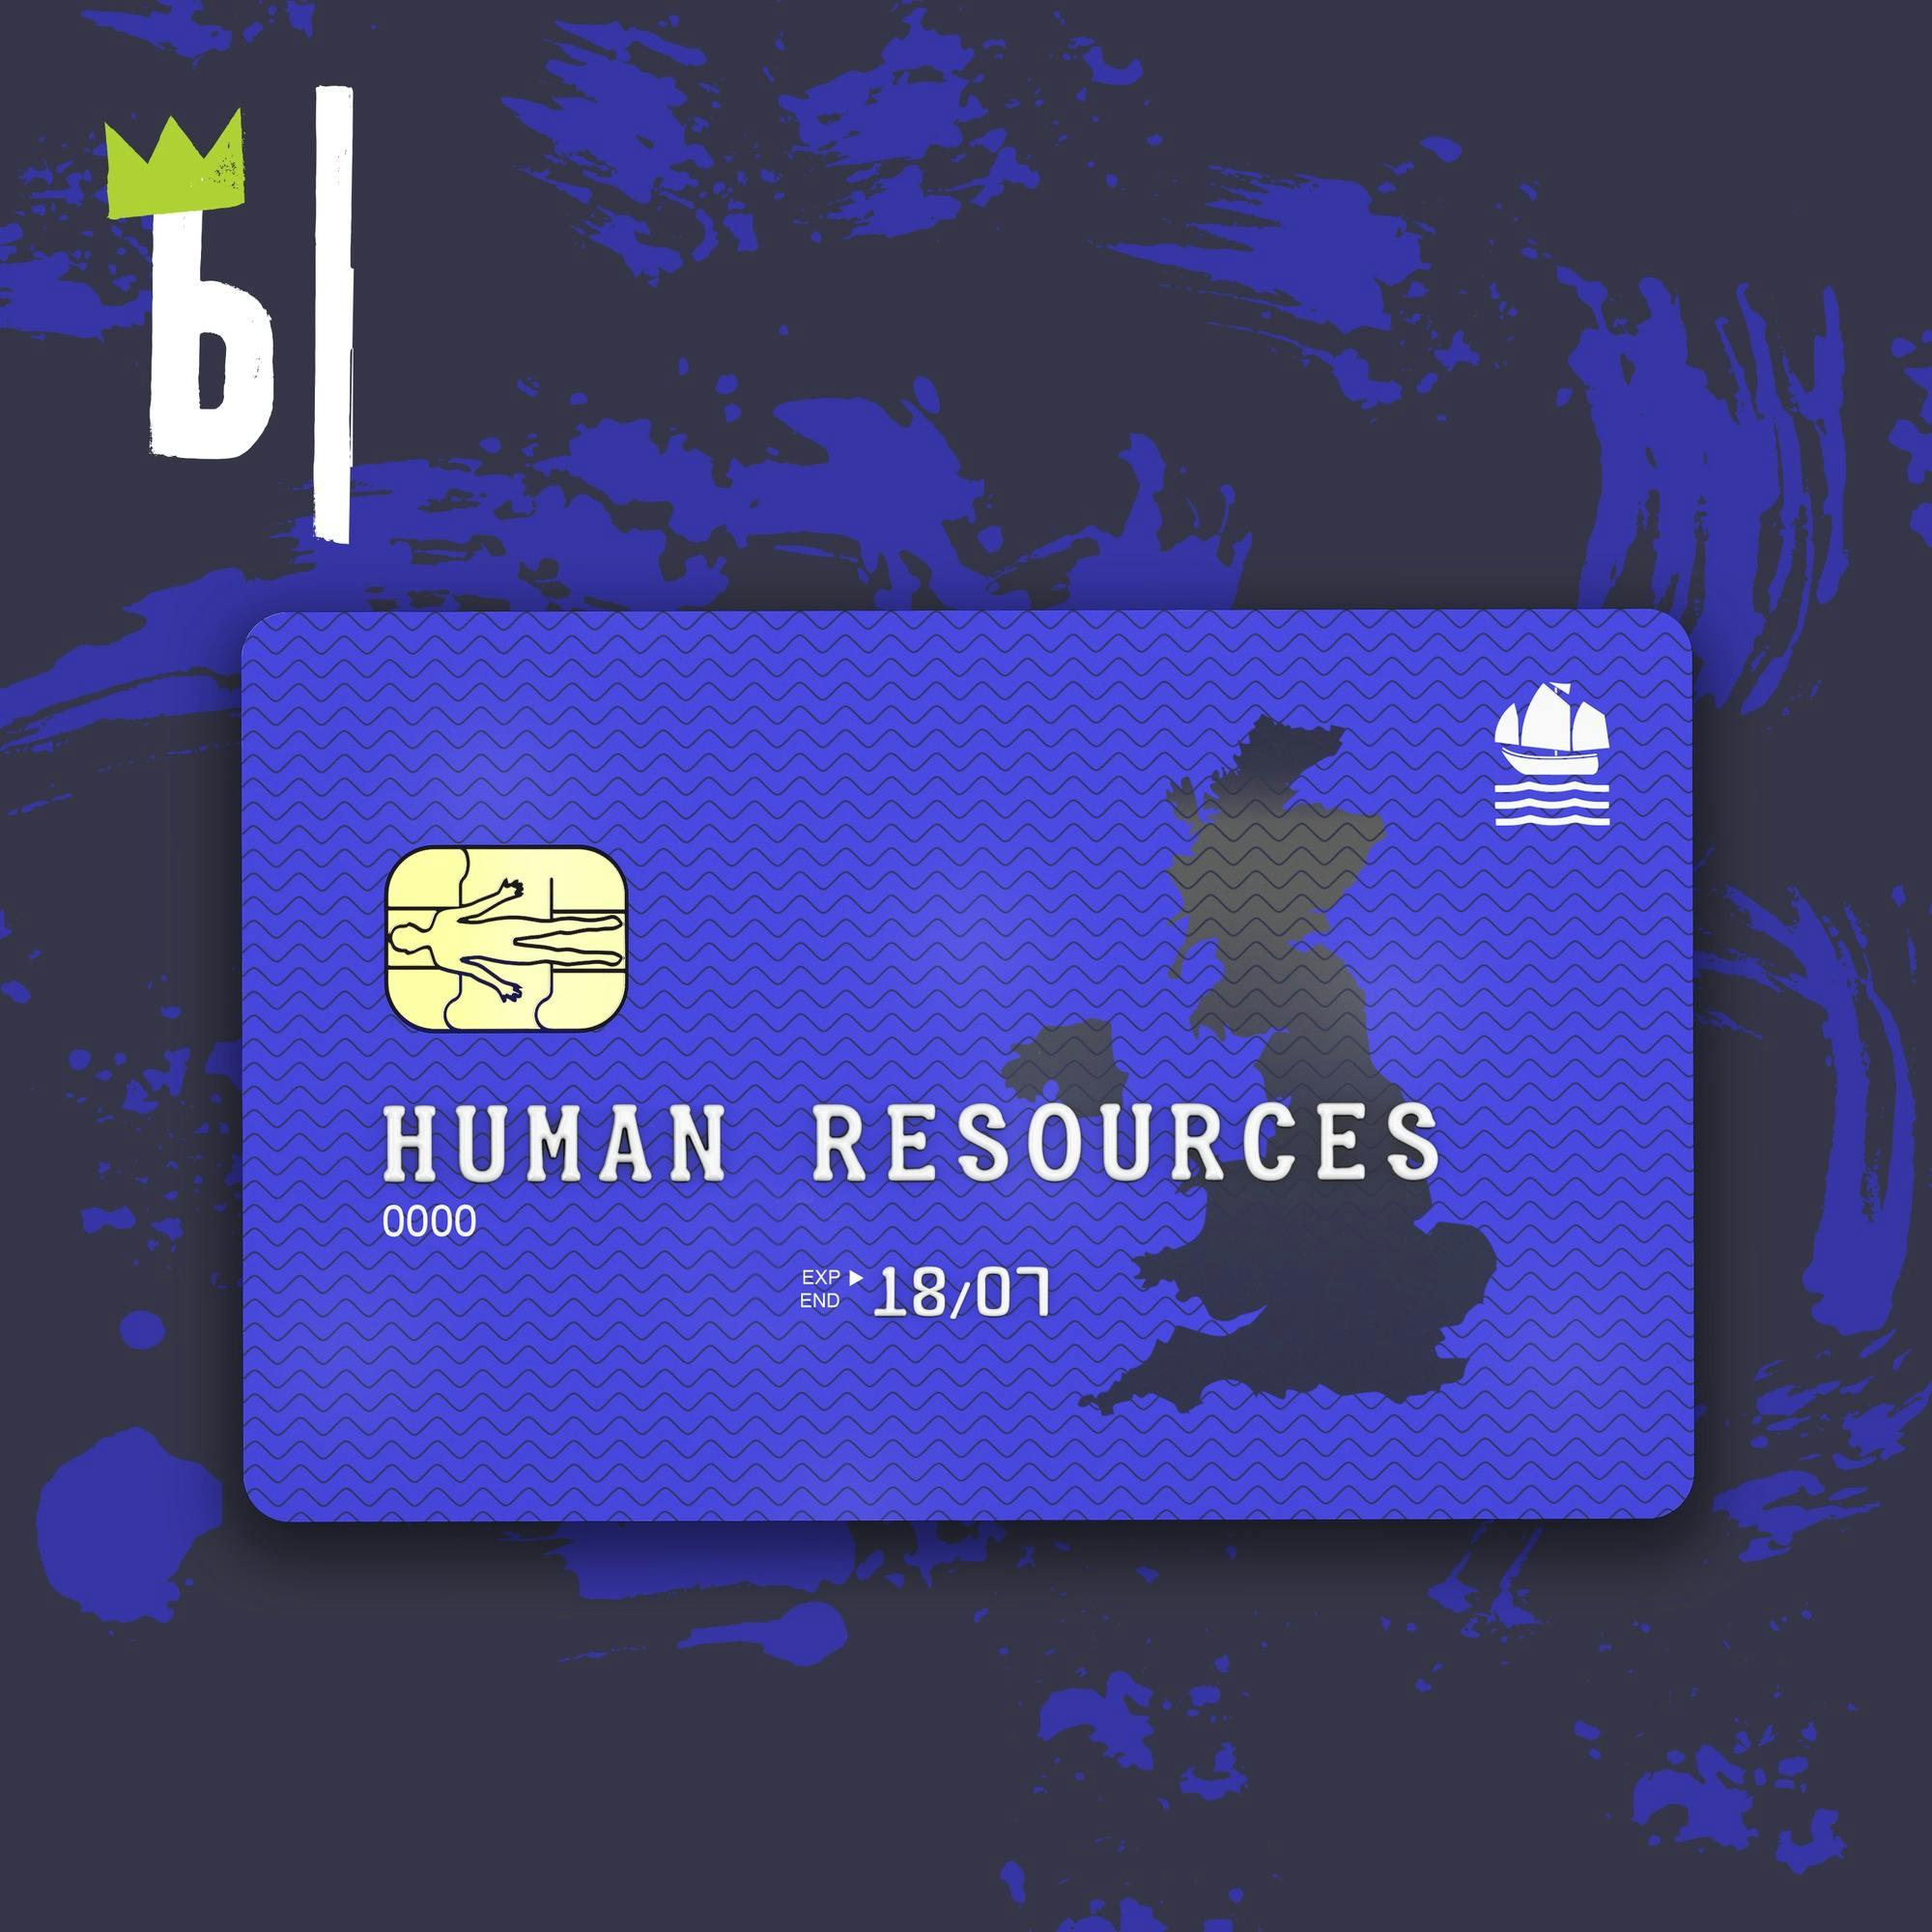 Introducing Human Resources